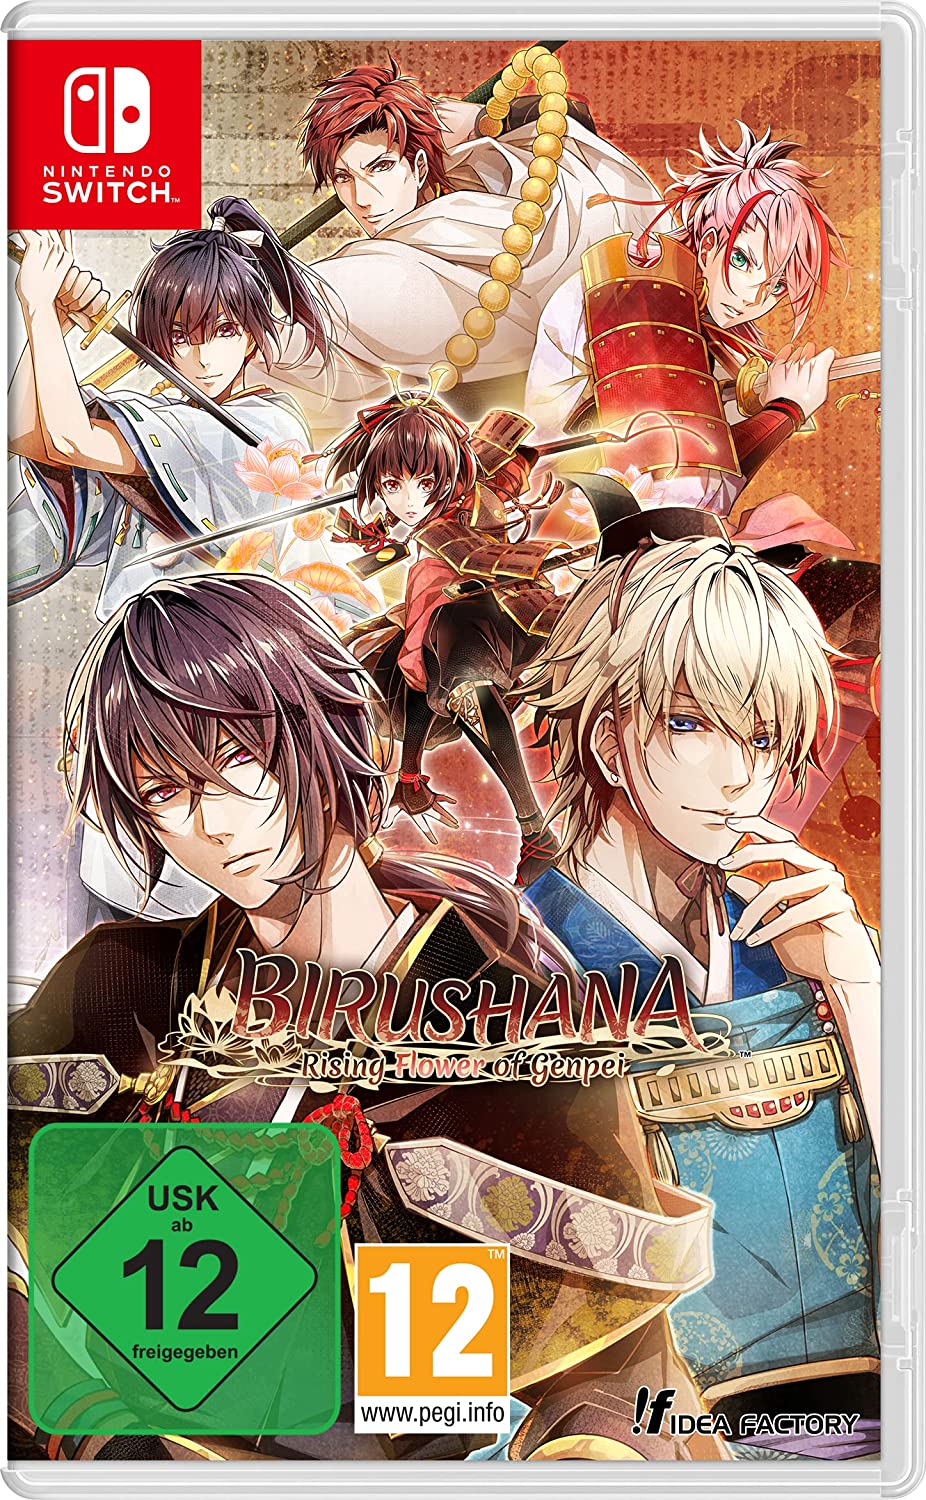 Birushana: Rising Flower of Genpei – Standard Edition (Nintendo Switch)